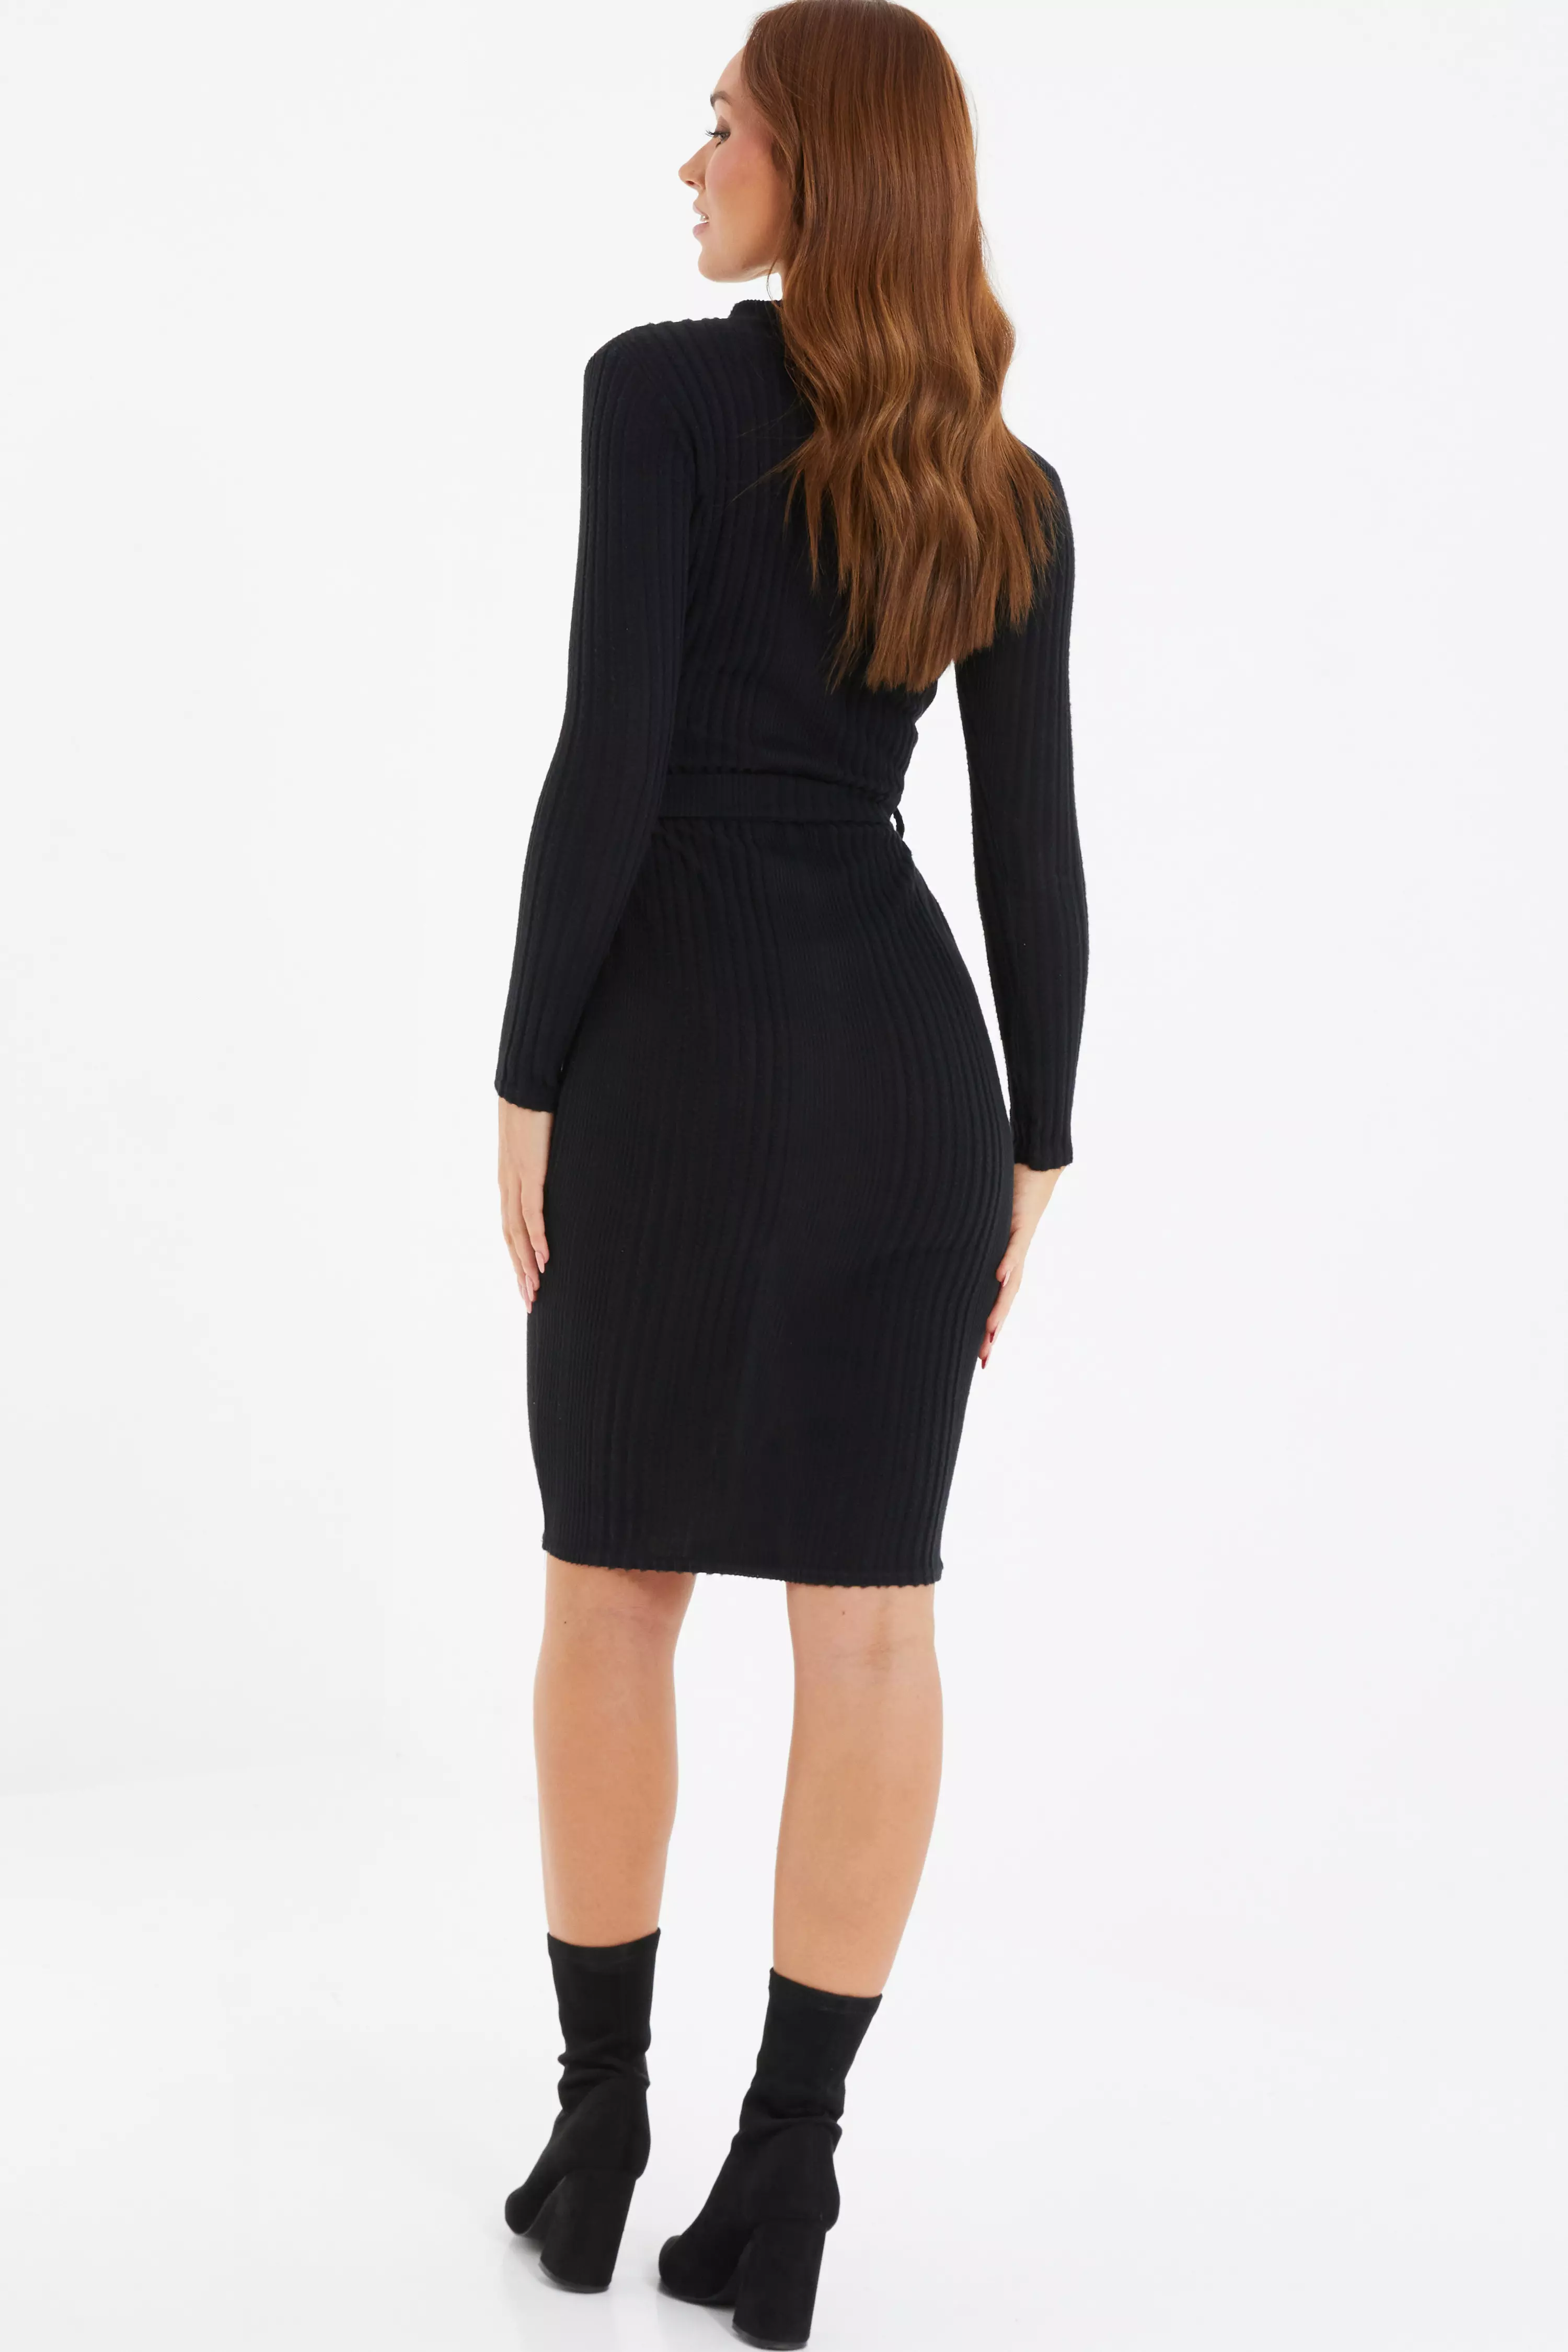 Black Knitted Long Sleeve Midi Dress